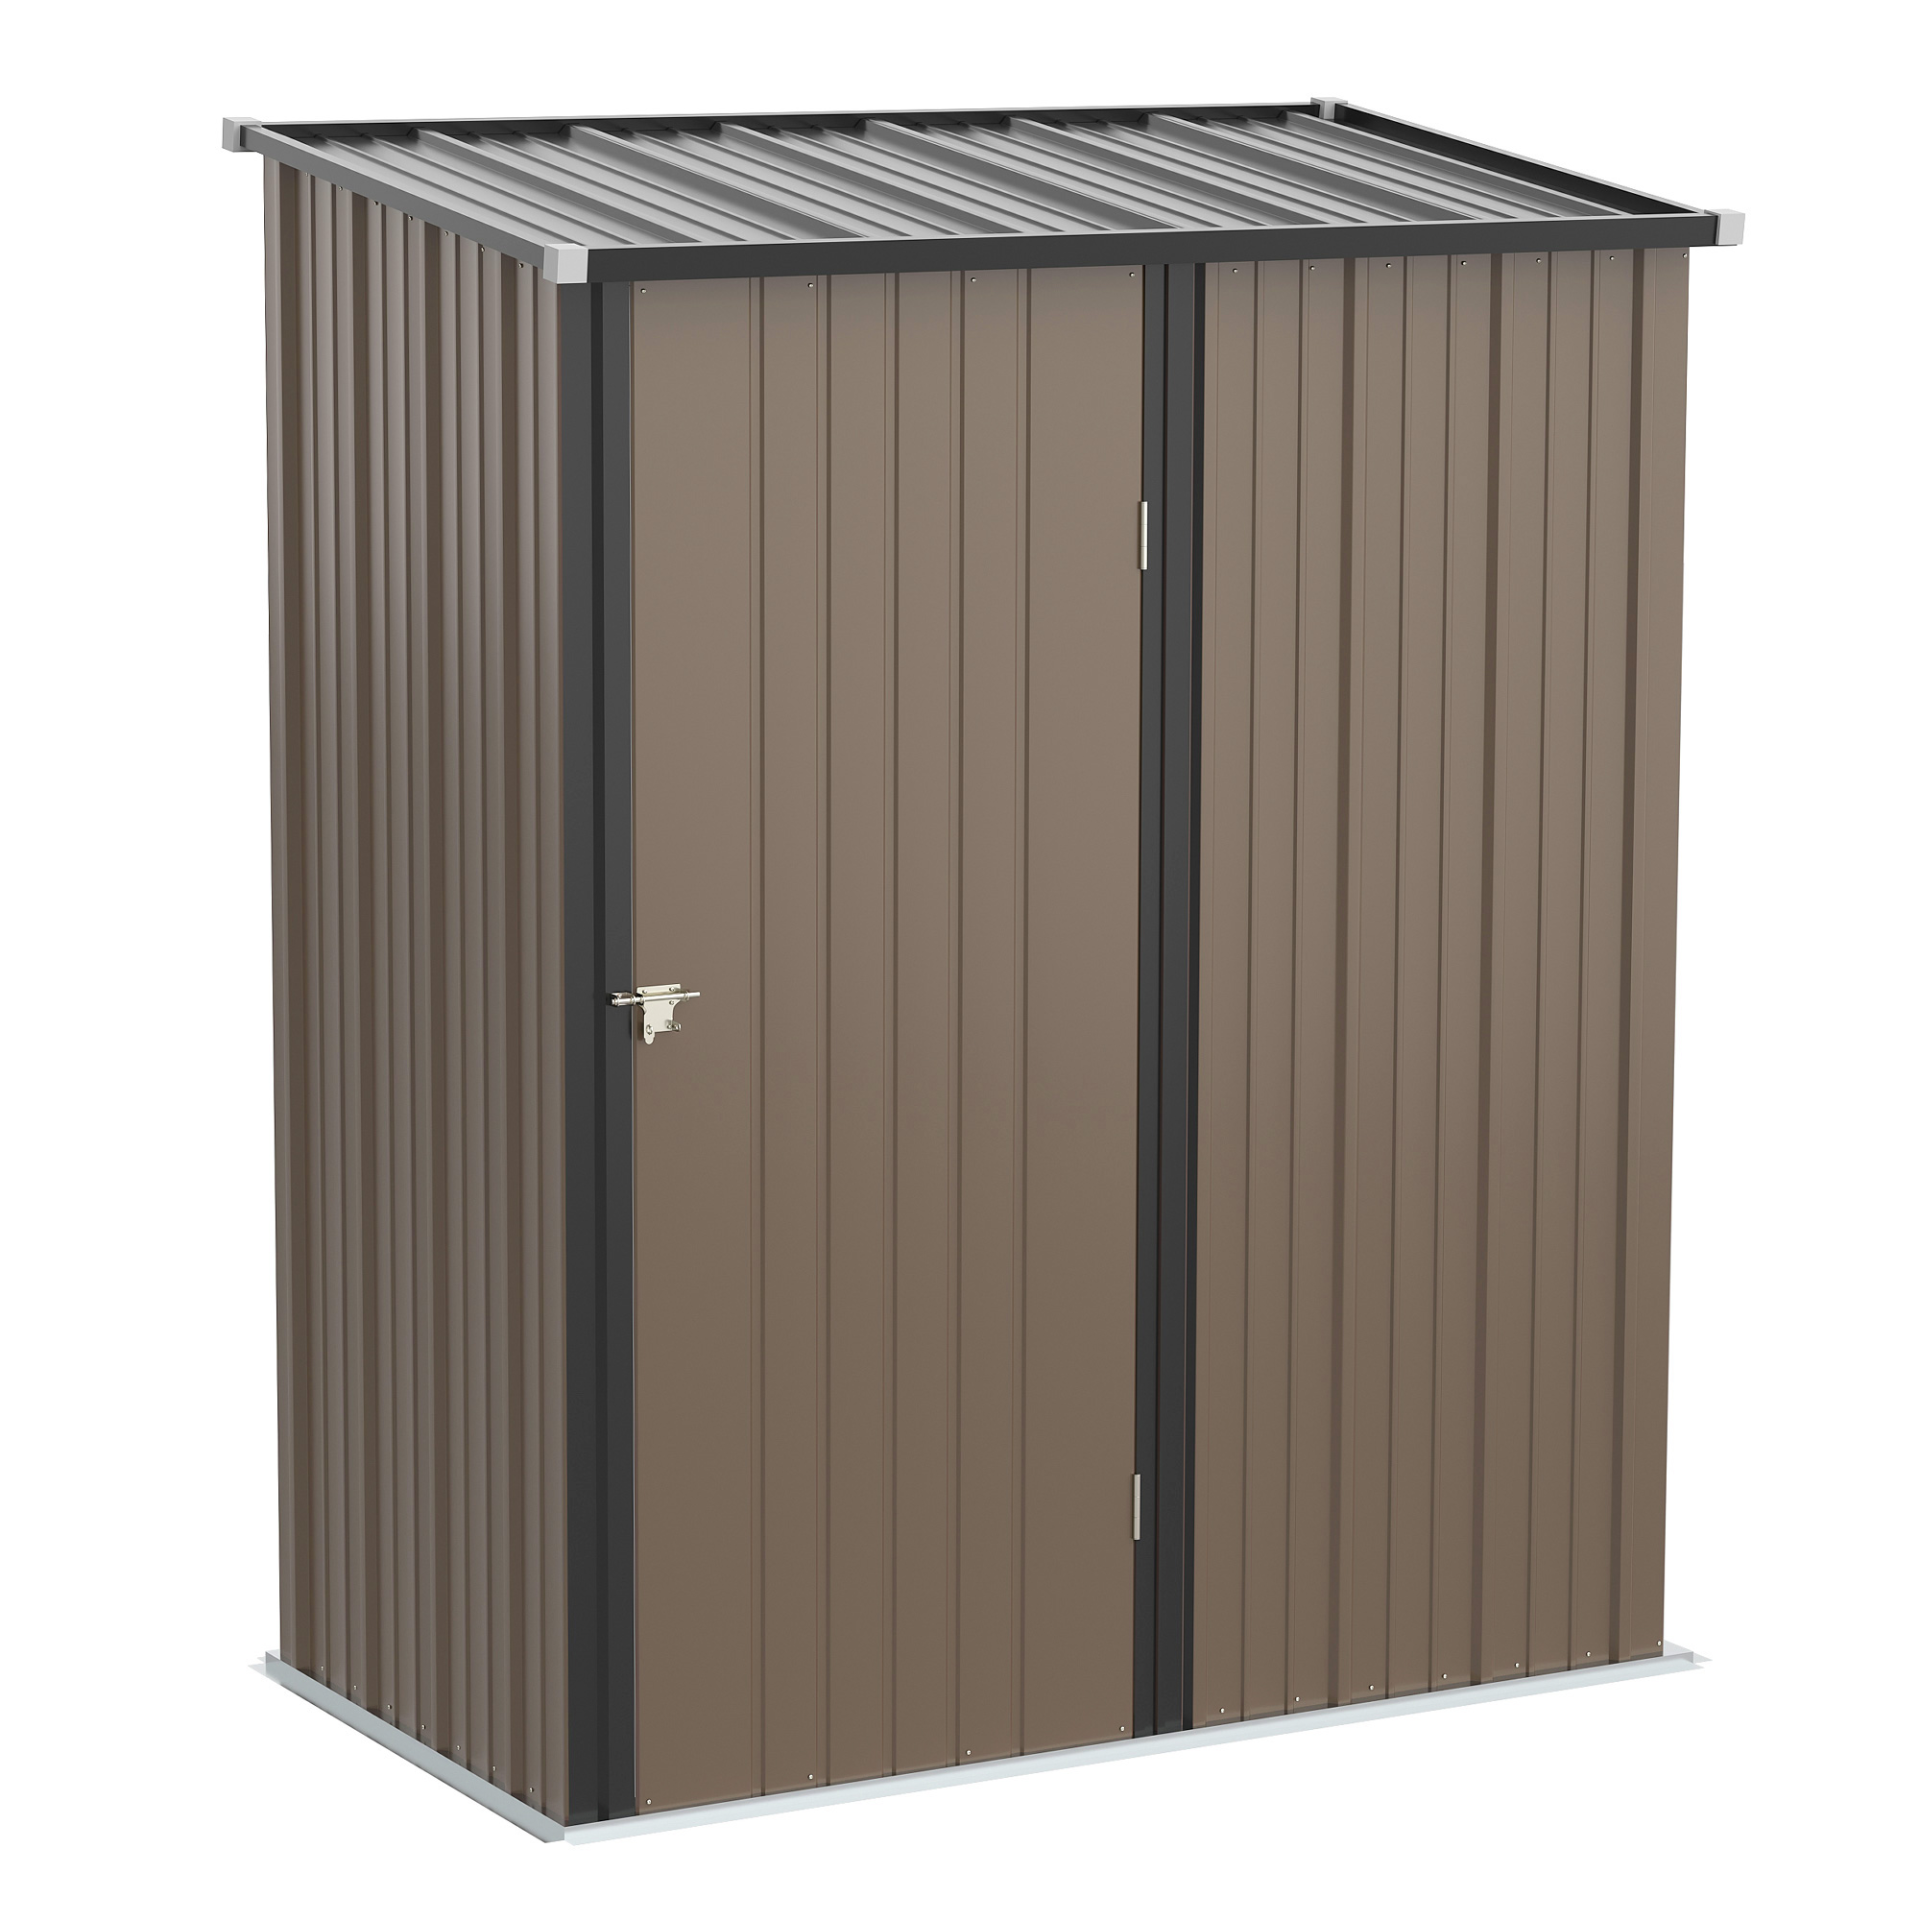 Outdoor Storage Shed Garden Metal Storage Shed with Single Lockable Door Tool